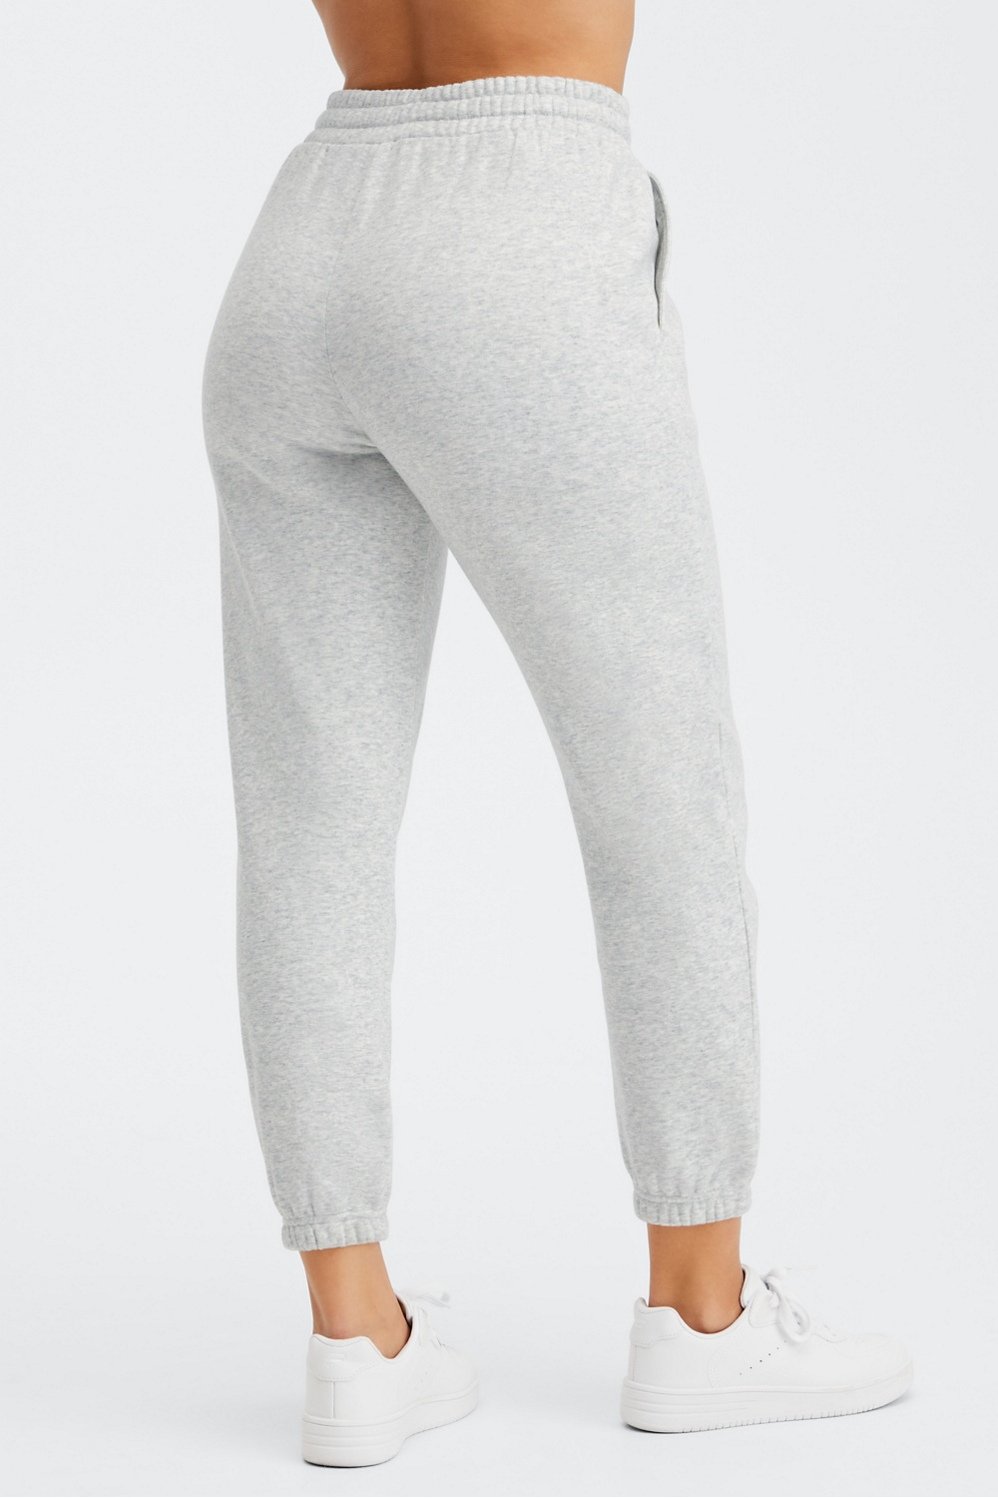 Brilliant Basics Women's Basic Fleece Track Pants - Grey Marl - Size Small